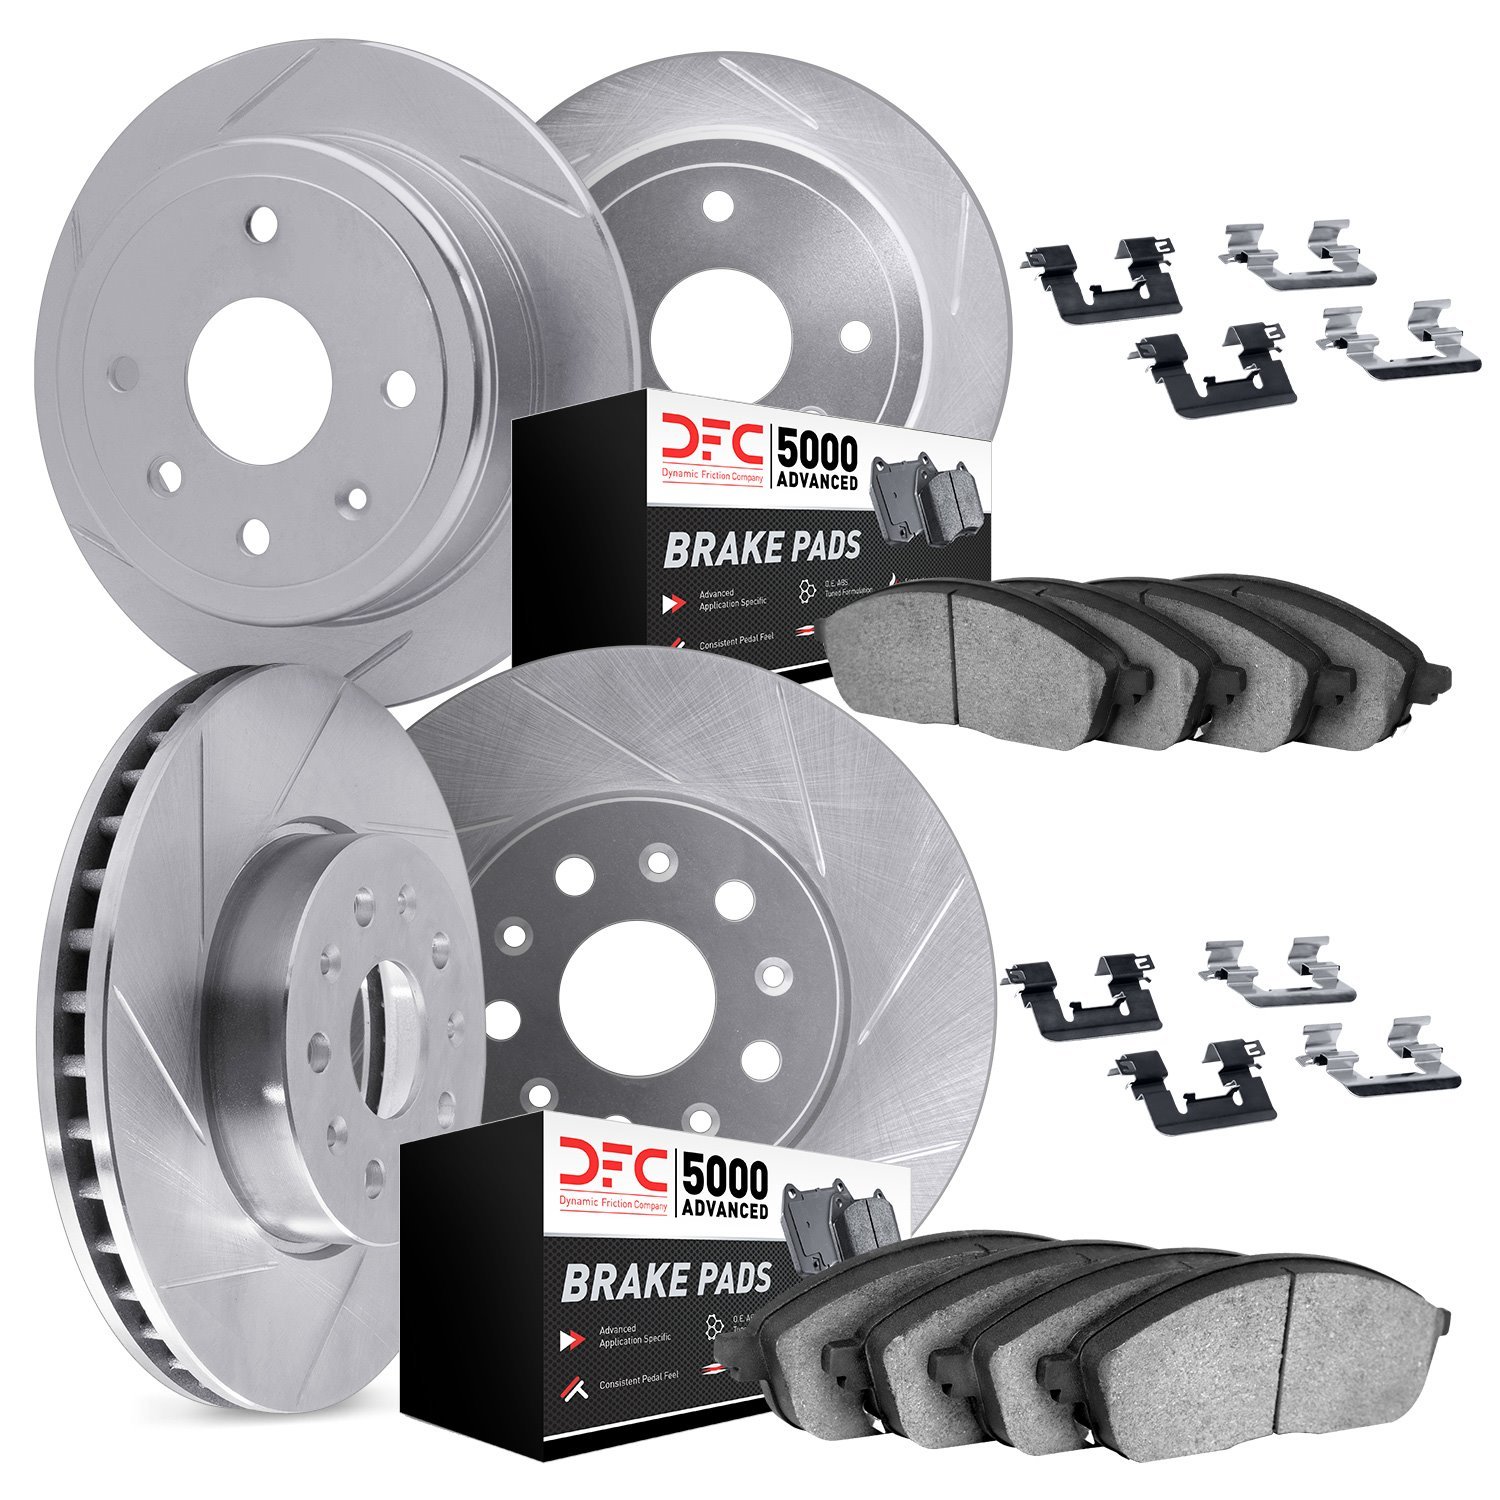 5514-55003 Slotted Brake Rotors w/5000 Advanced Brake Pads Kit & Hardware [Silver], 2015-2020 Ford/Lincoln/Mercury/Mazda, Positi